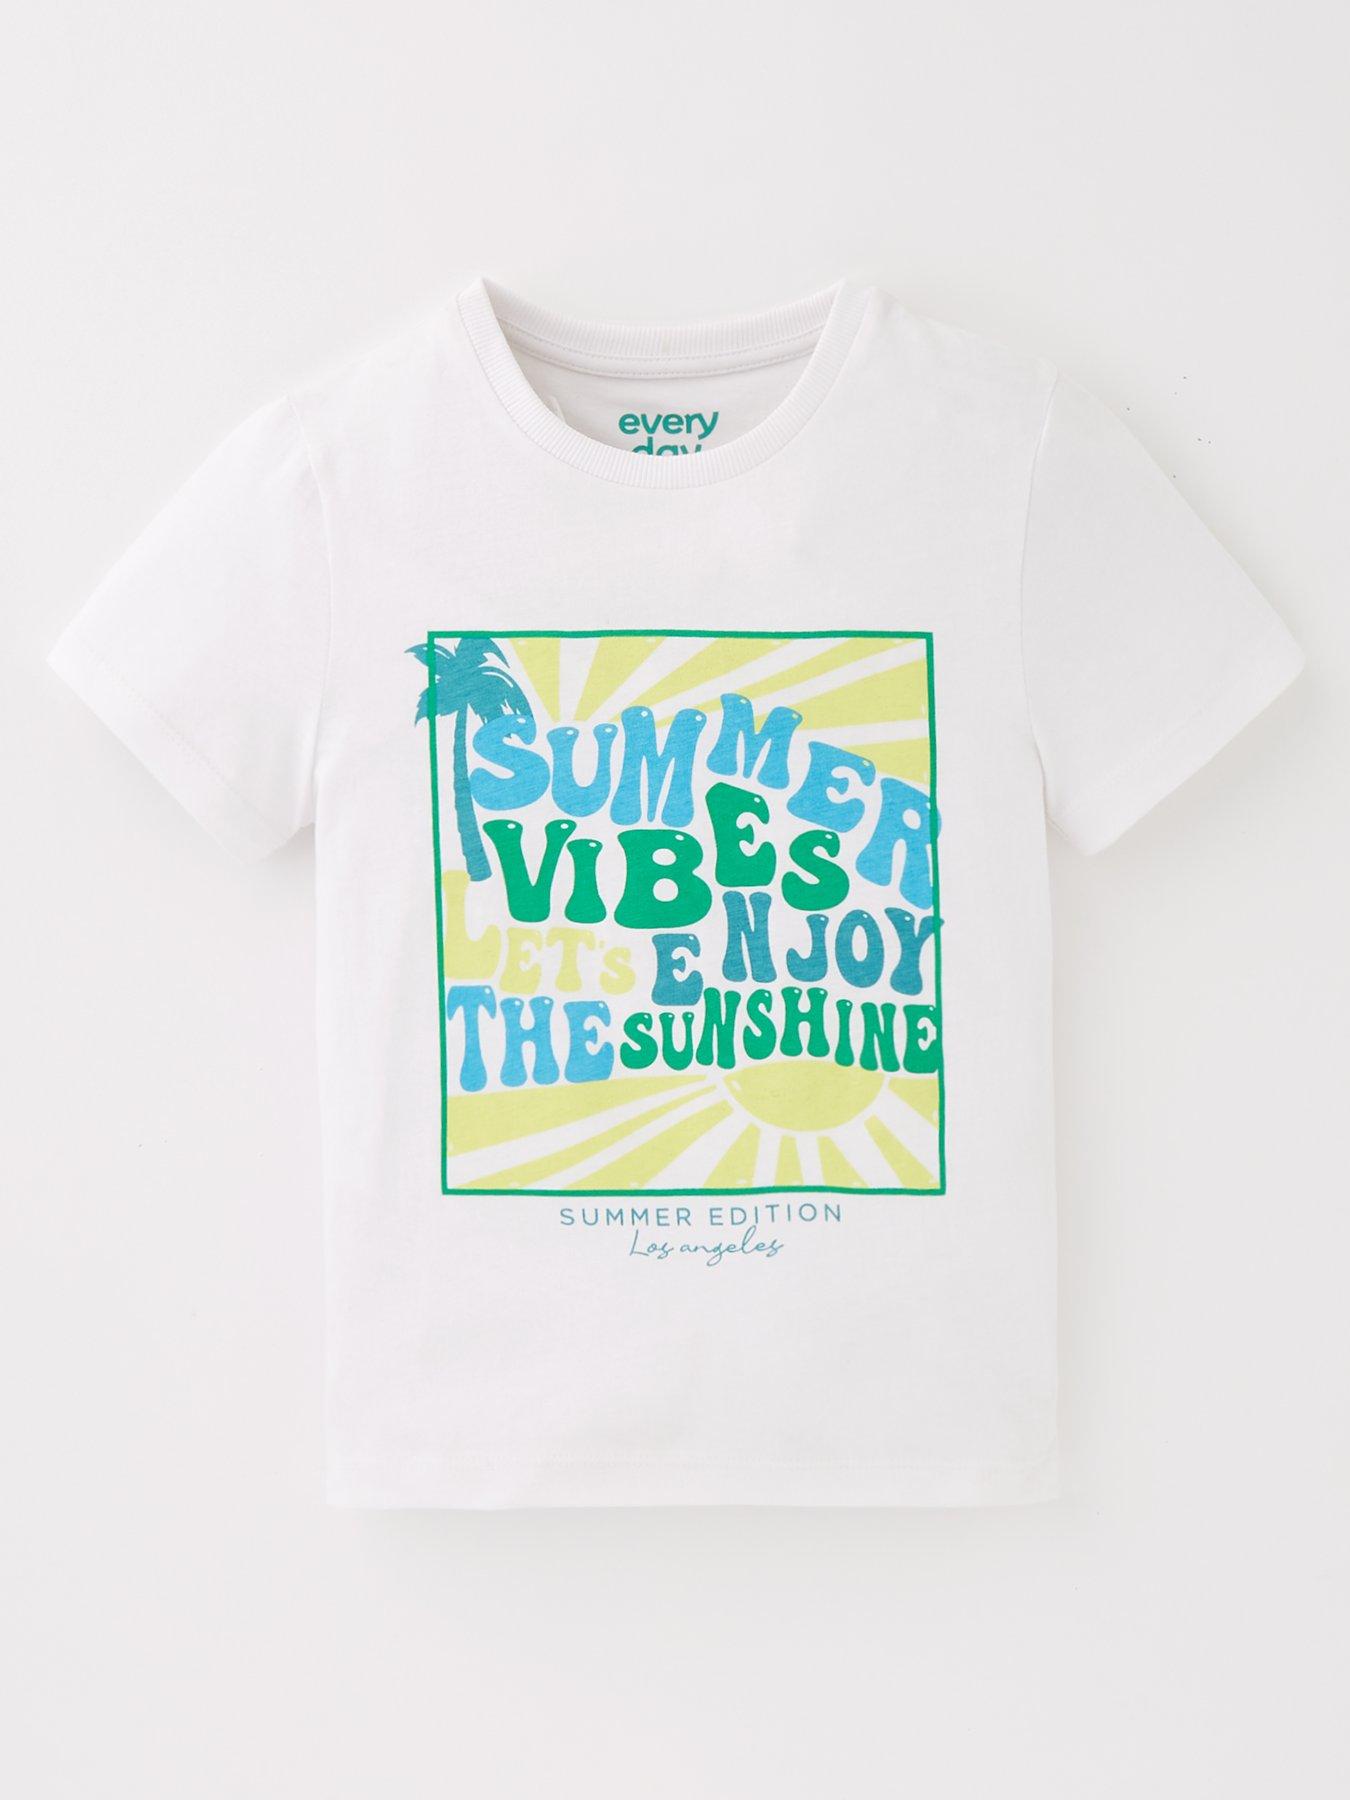 Toddler T-Shirts | Cutest Little Catch | Fishing Shirt | Graphic T-Shirt |  Kids Clothes | Nature Lover | Play Shirt | Cute Fishing Shirt